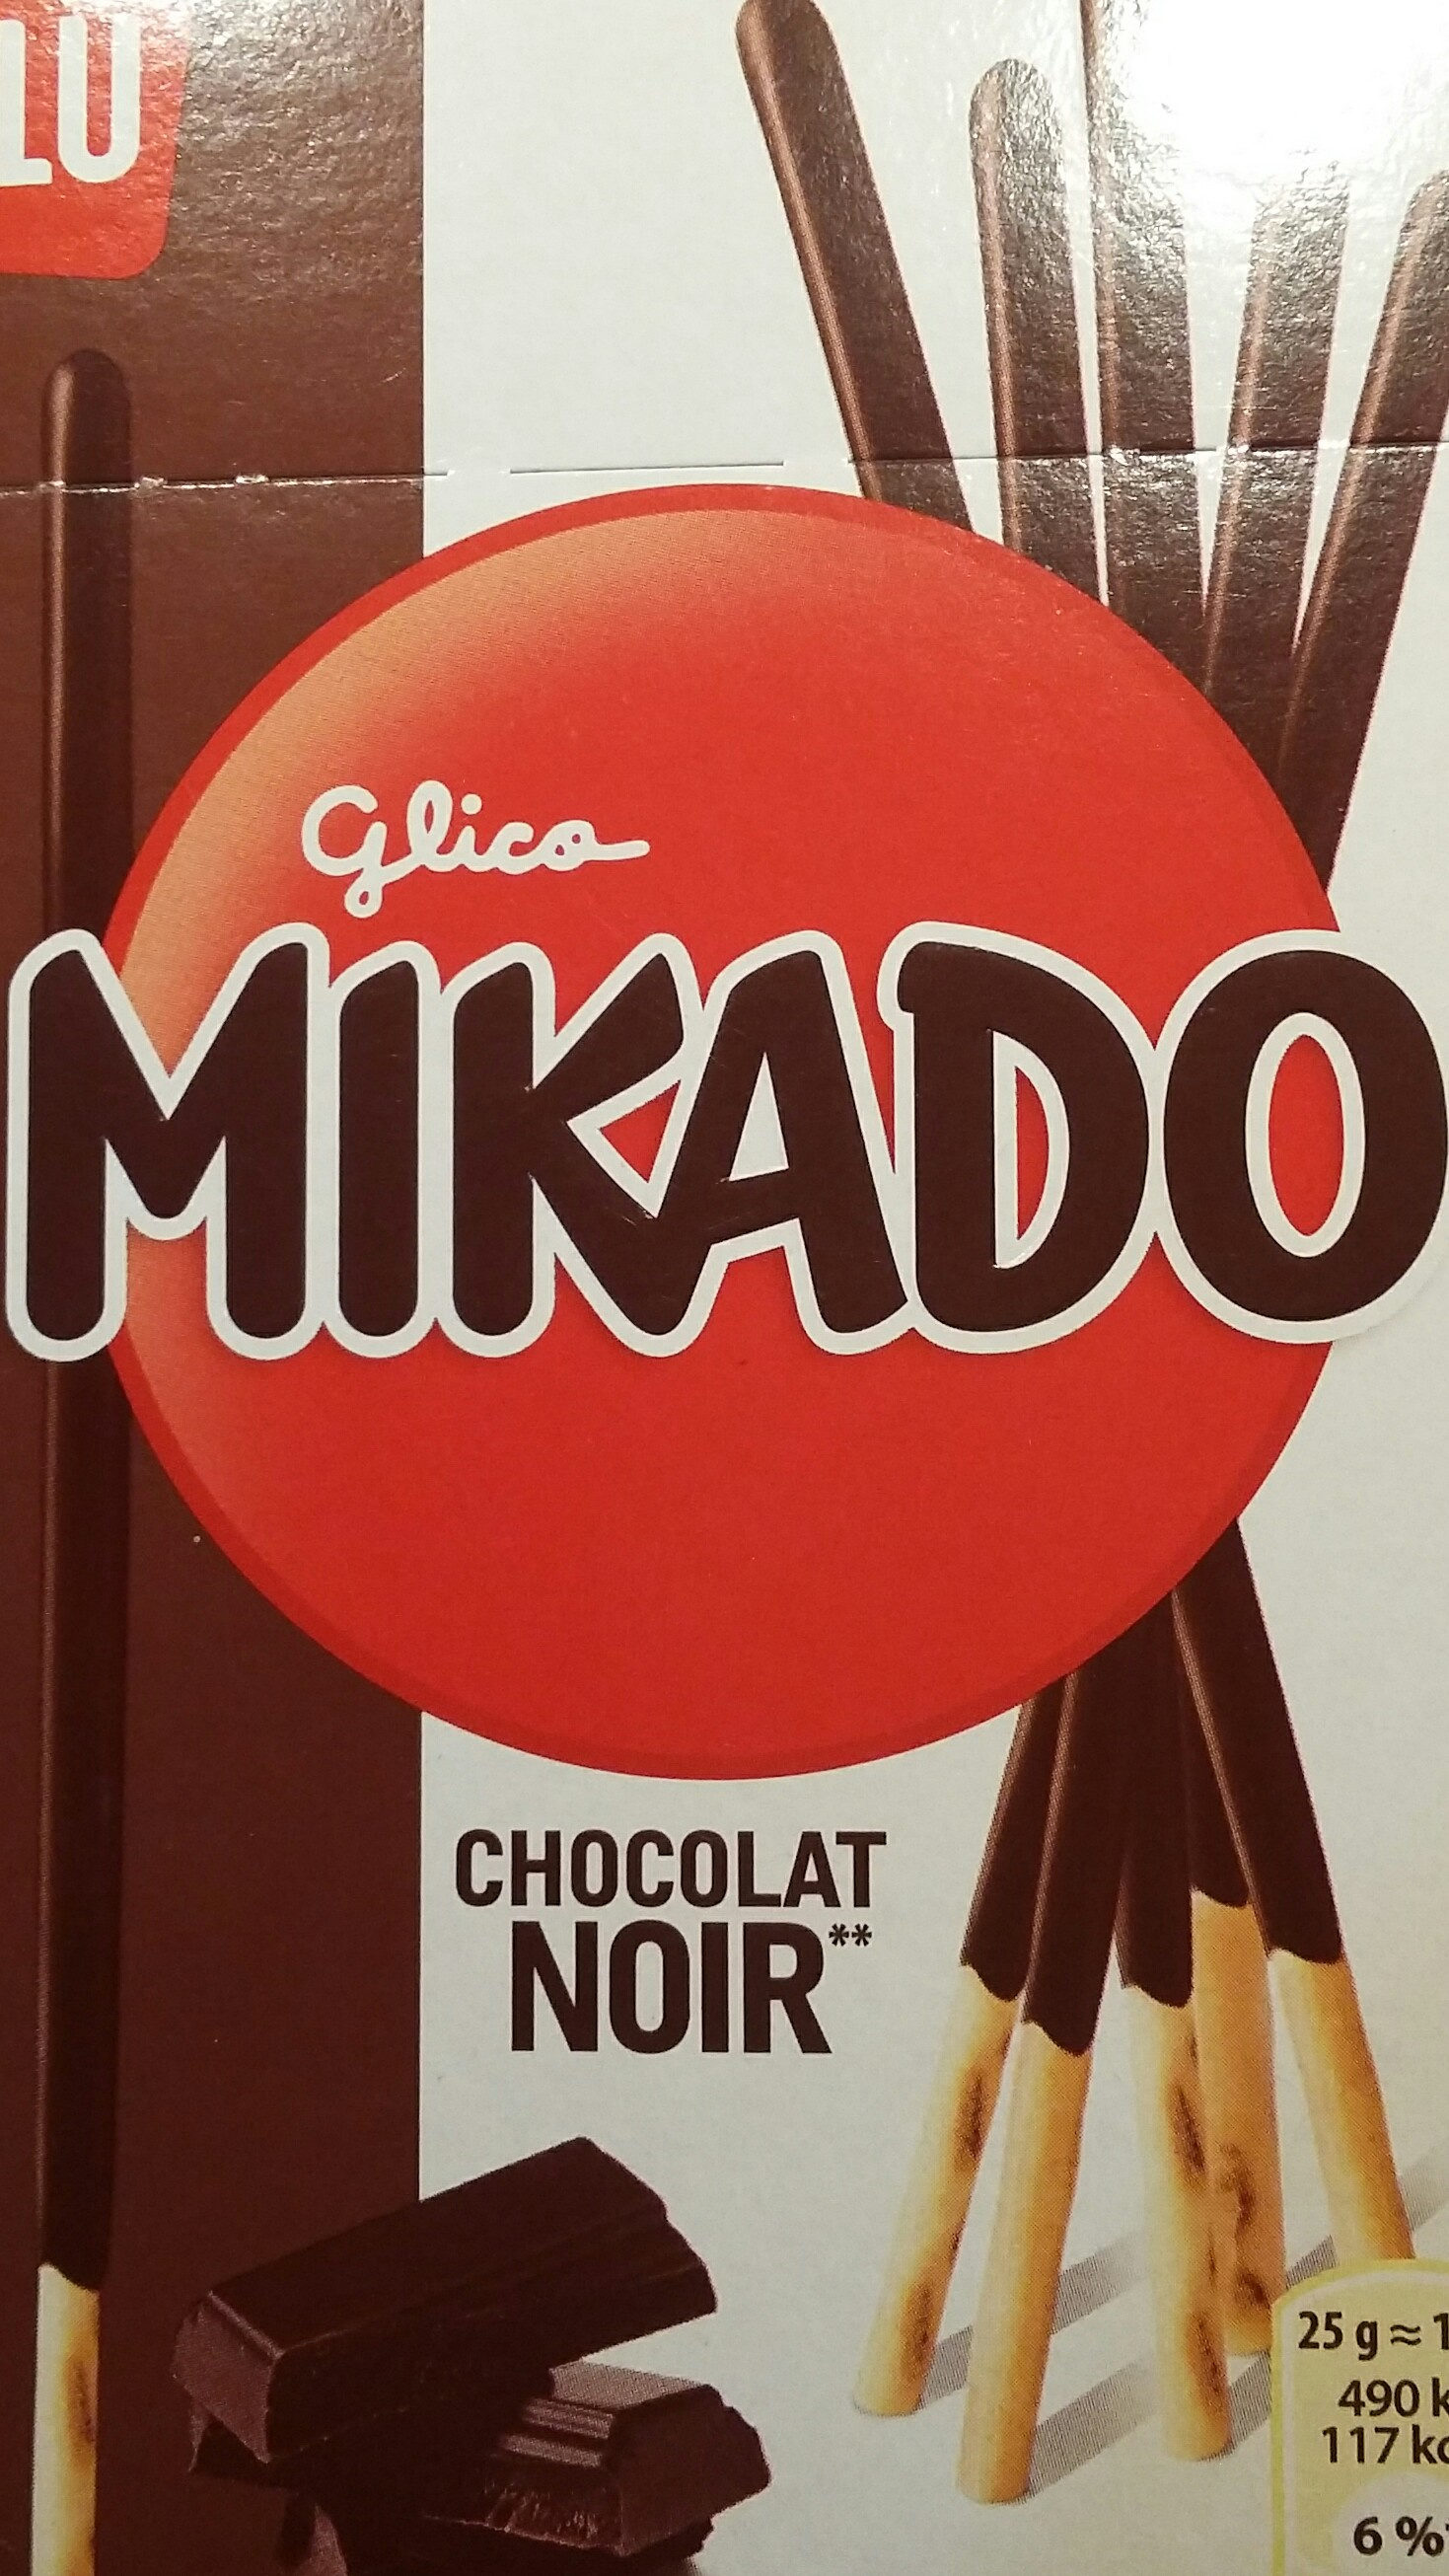 mikado - Product - fr